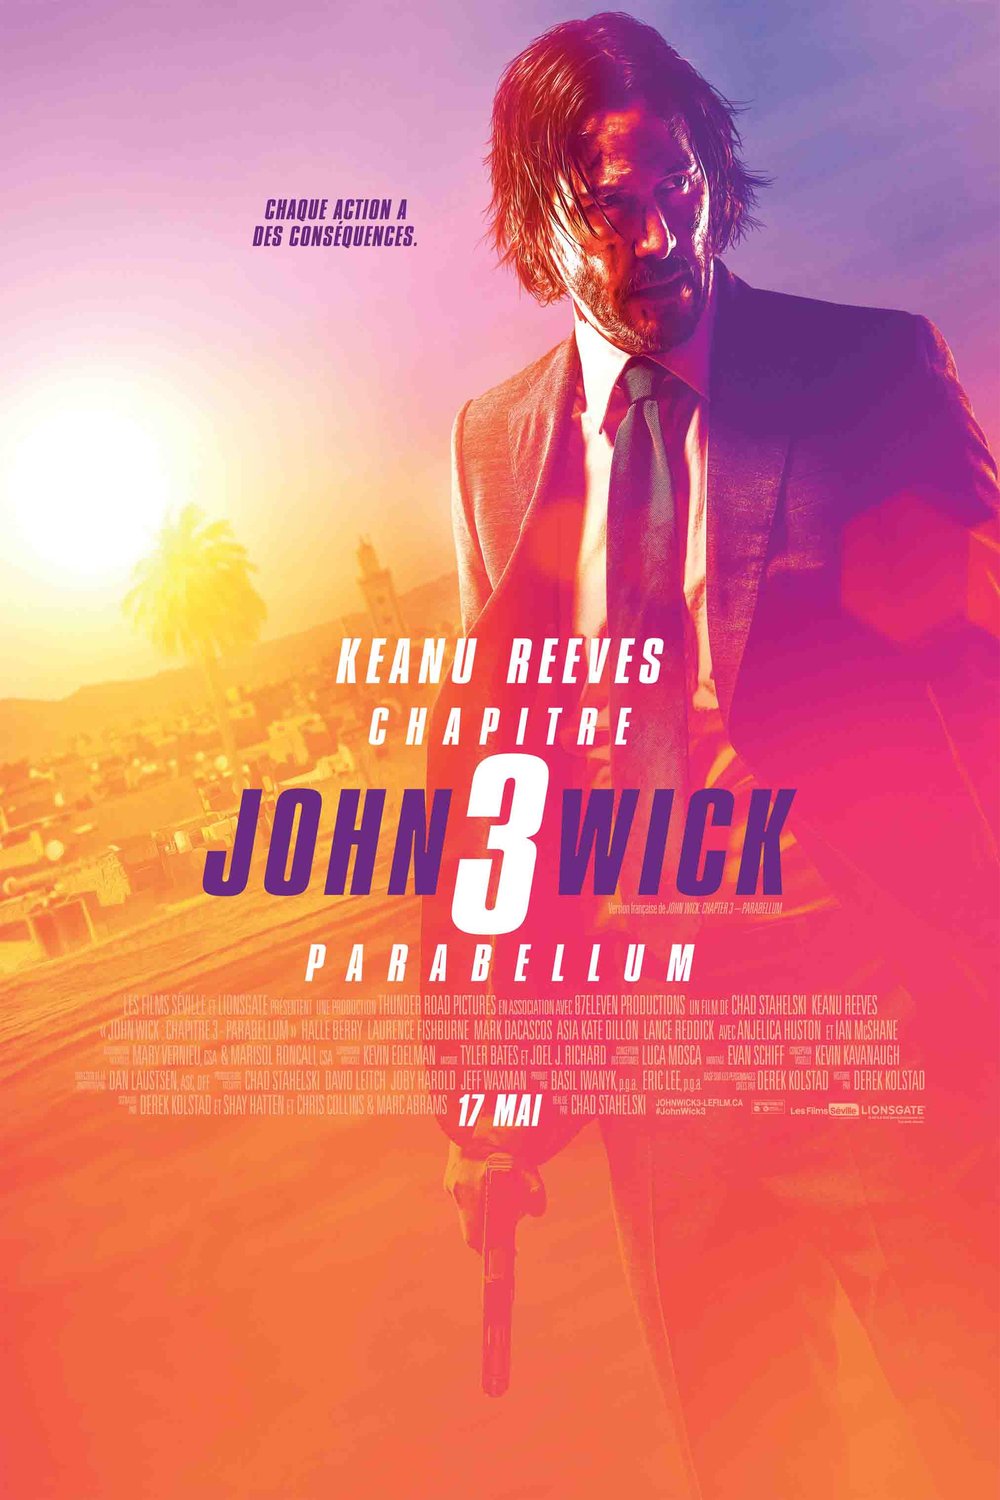 Poster of the movie John Wick Chapitre 3: Parabellum v.f.